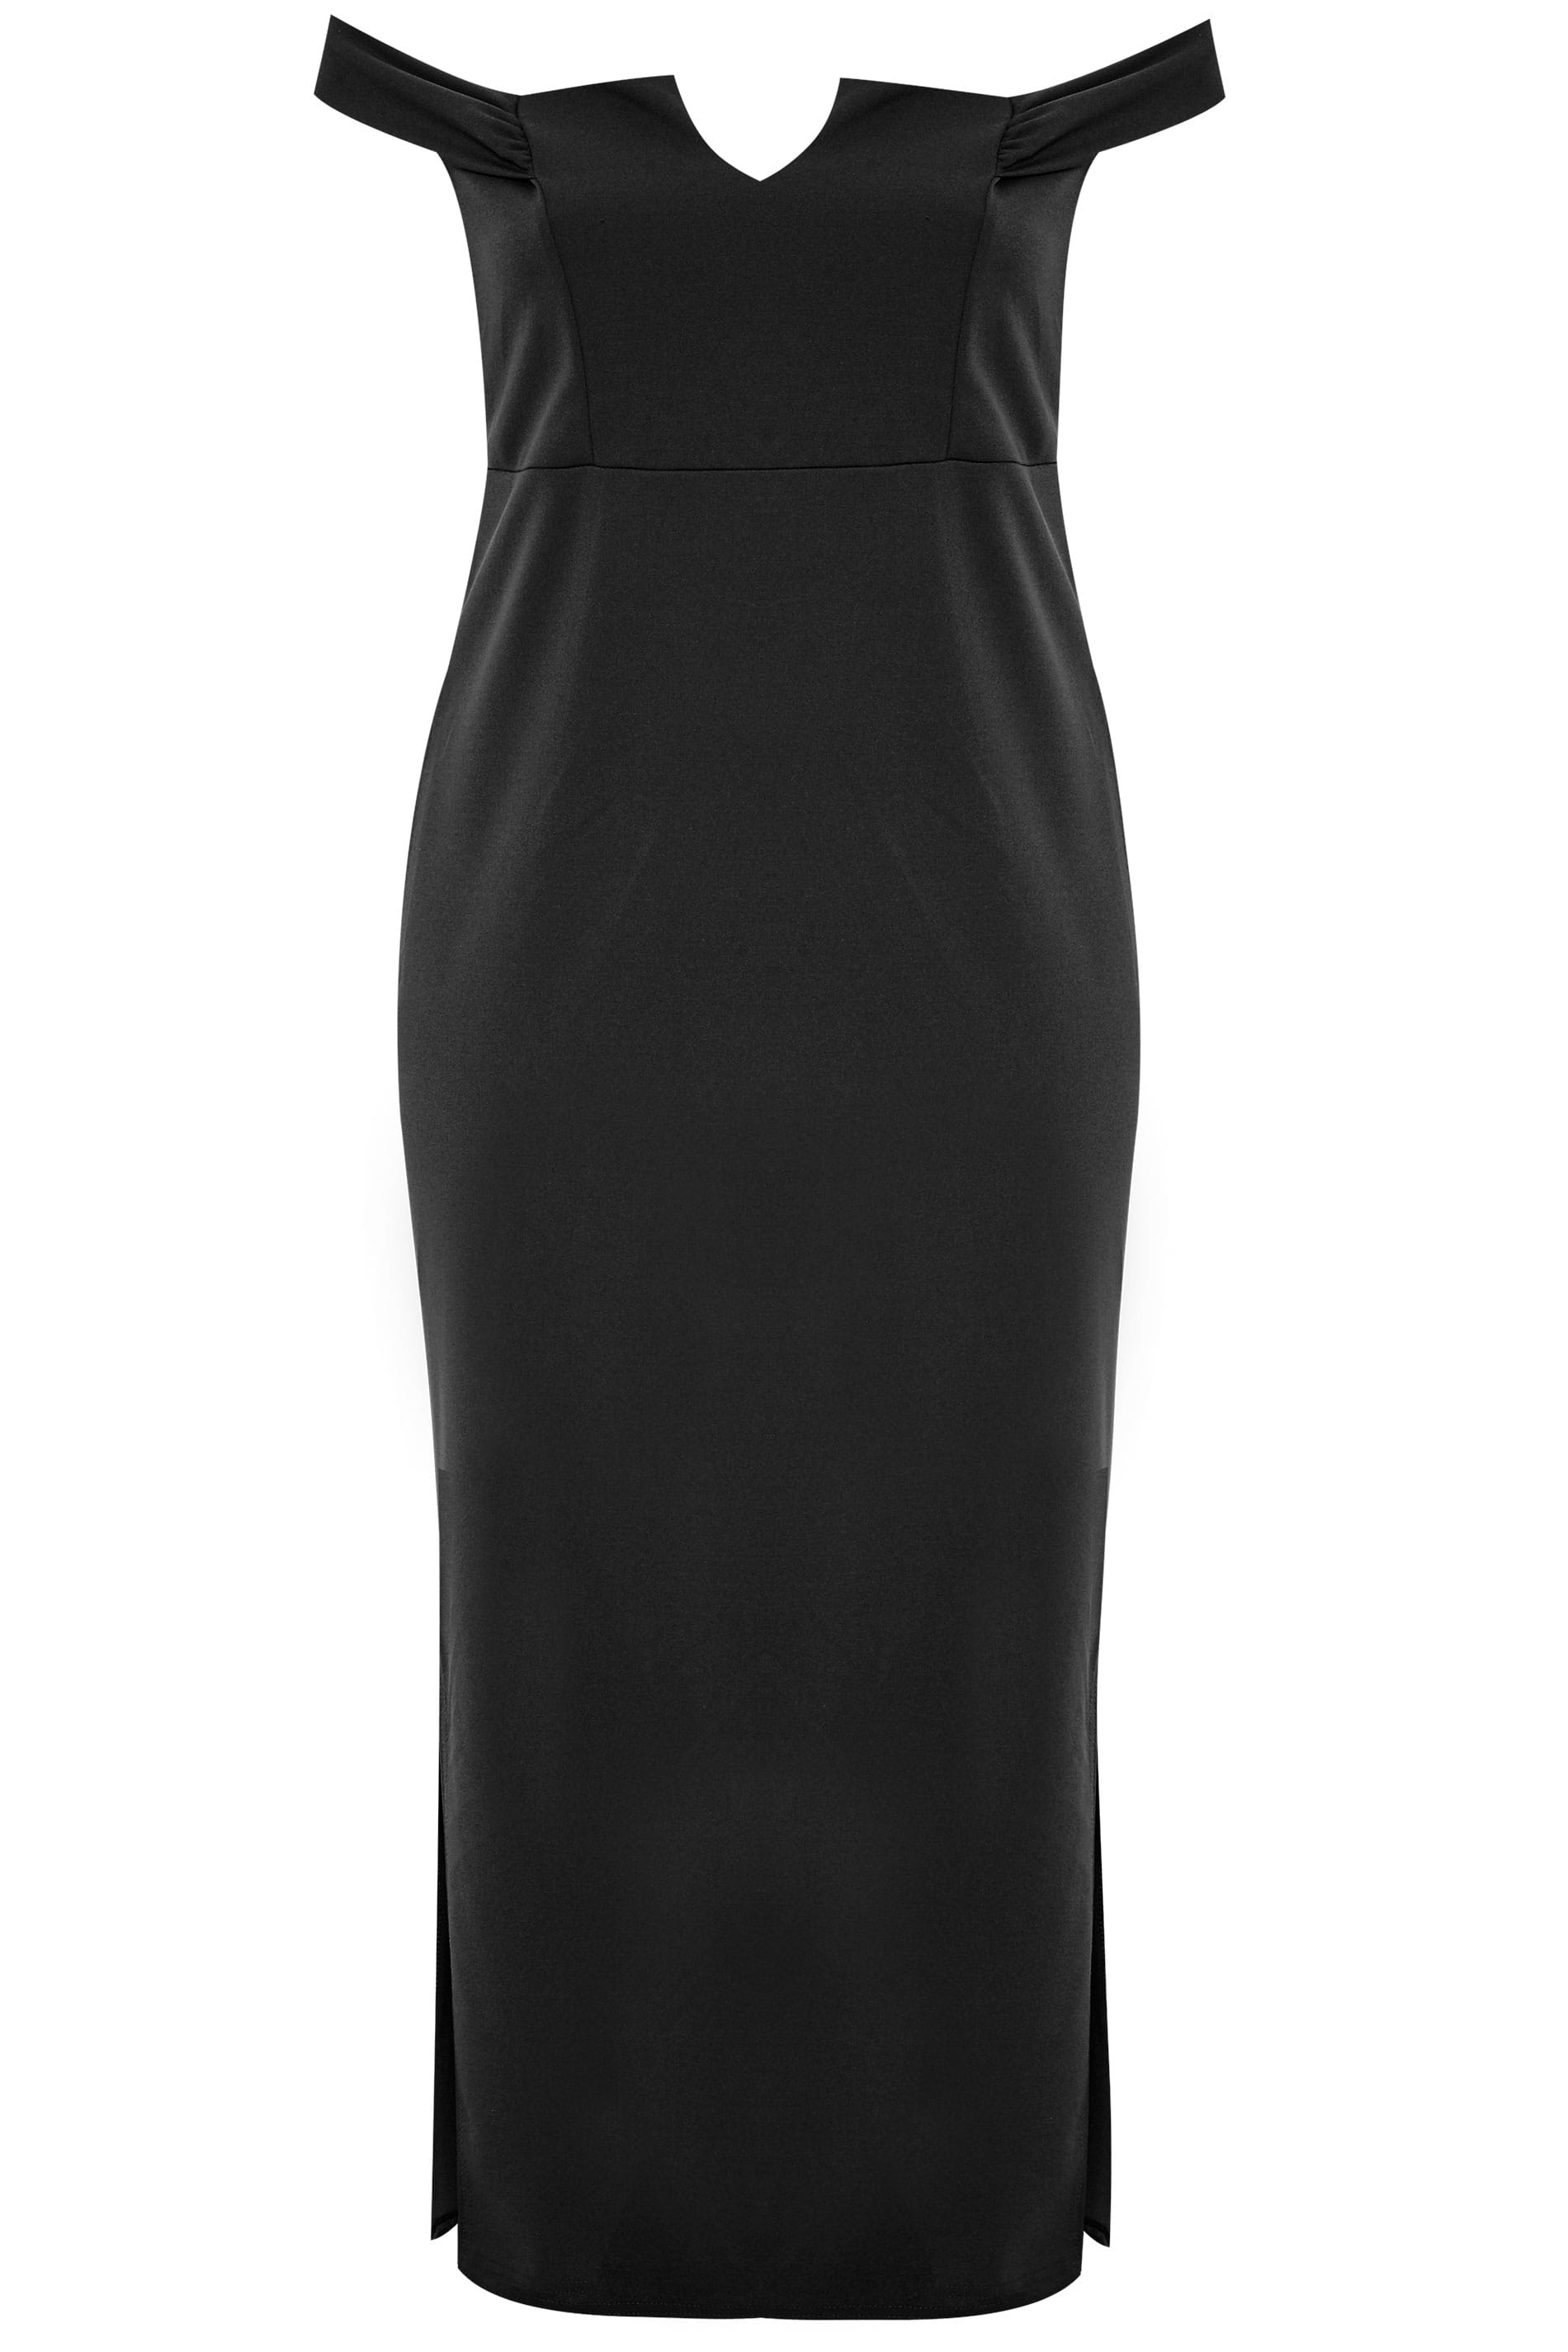 YOURS LONDON Black Bardot Maxi Dress | Yours Clothing